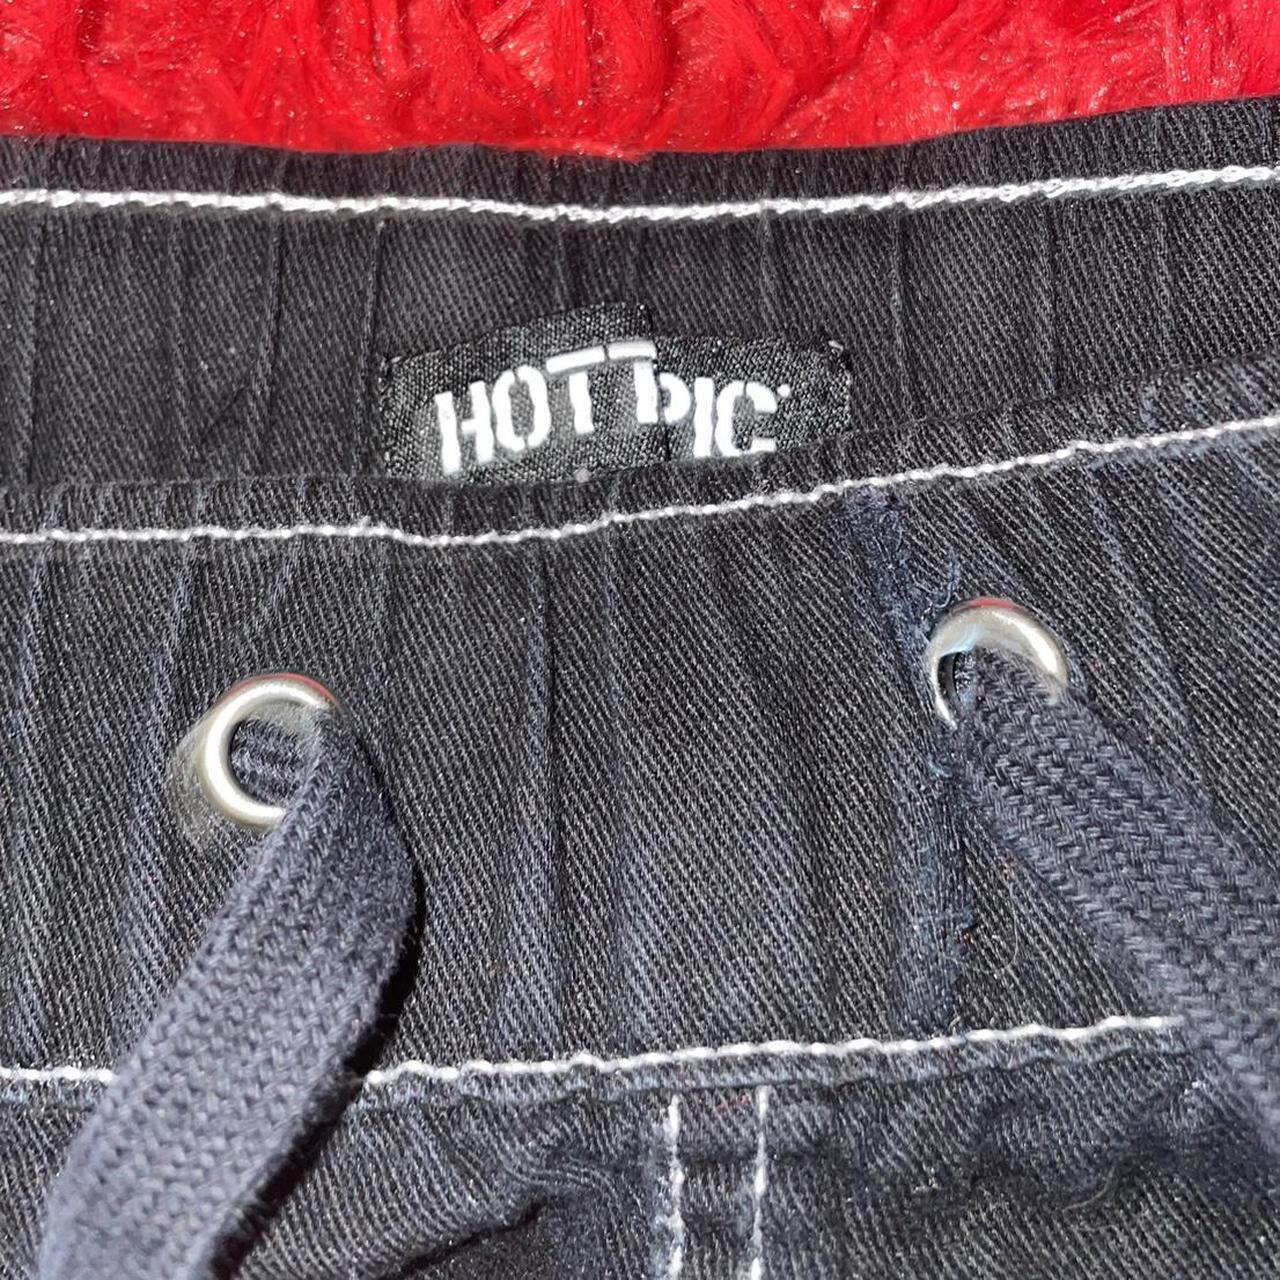 Hot topic Tripp pants size 28 - Depop